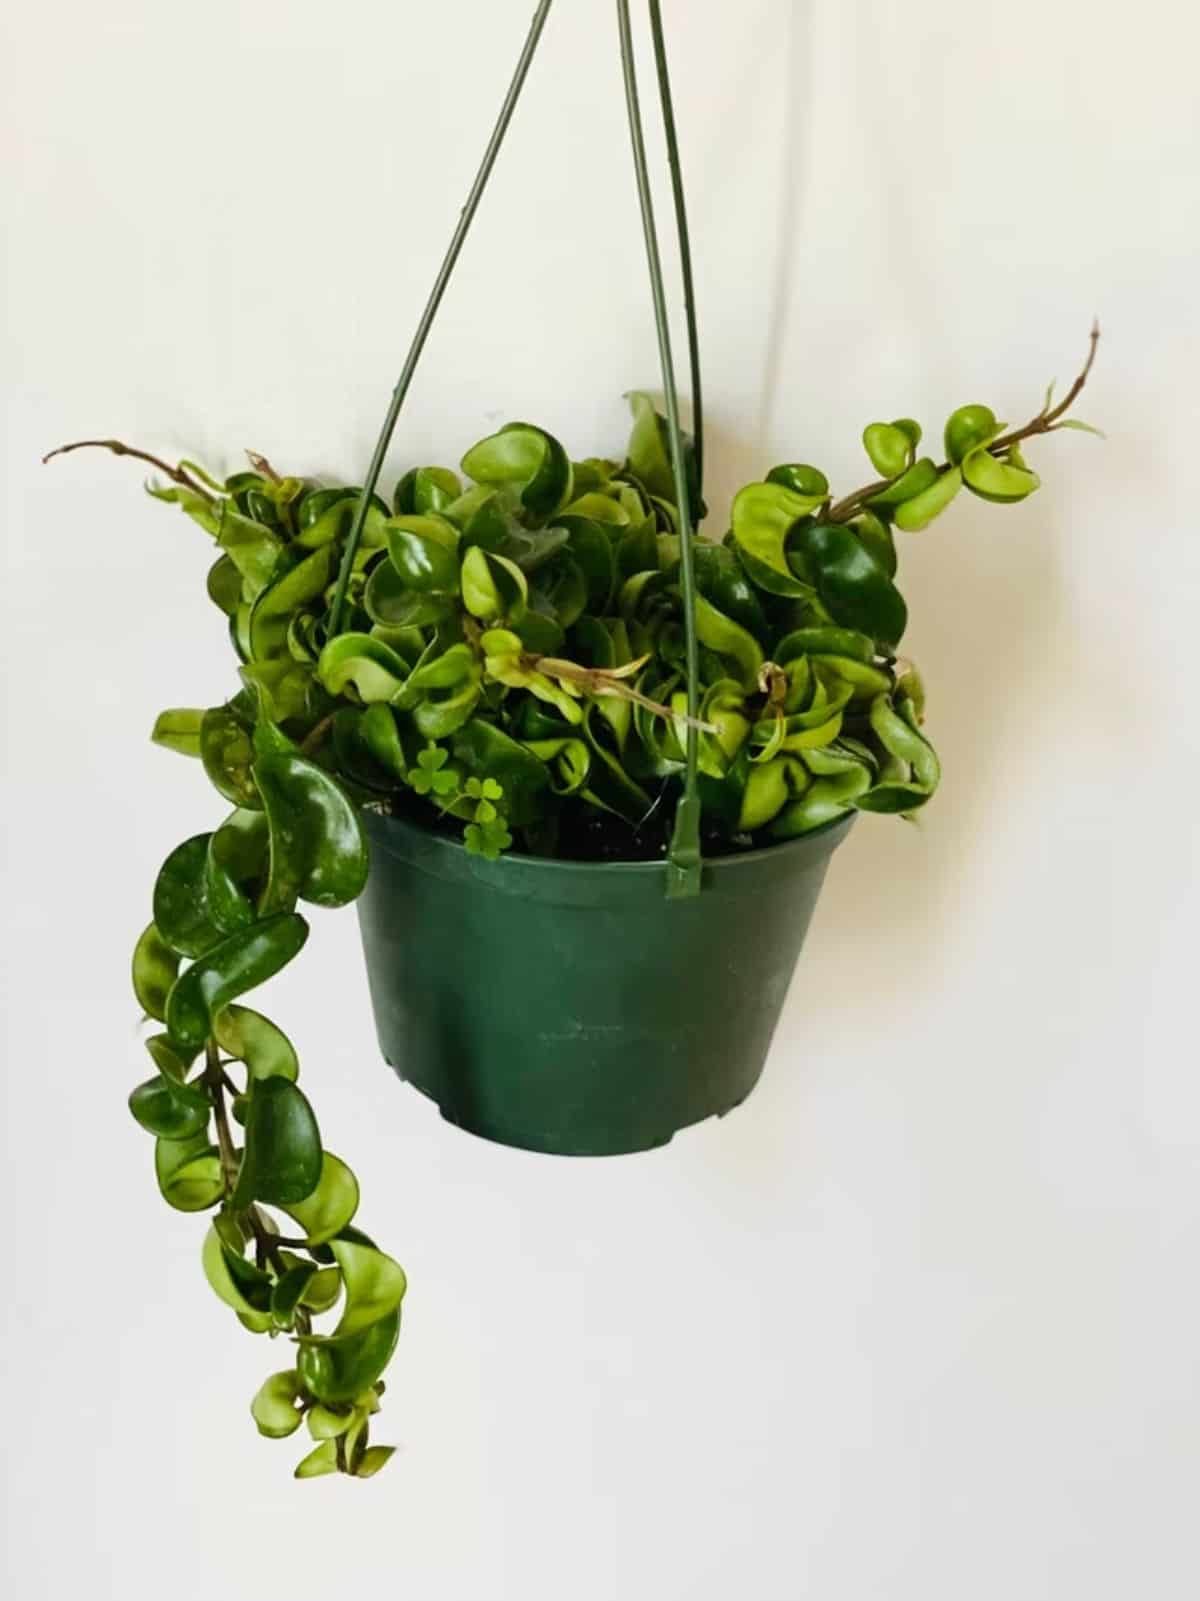 Hoya Carnosa Compacta grows in a hanging basket.